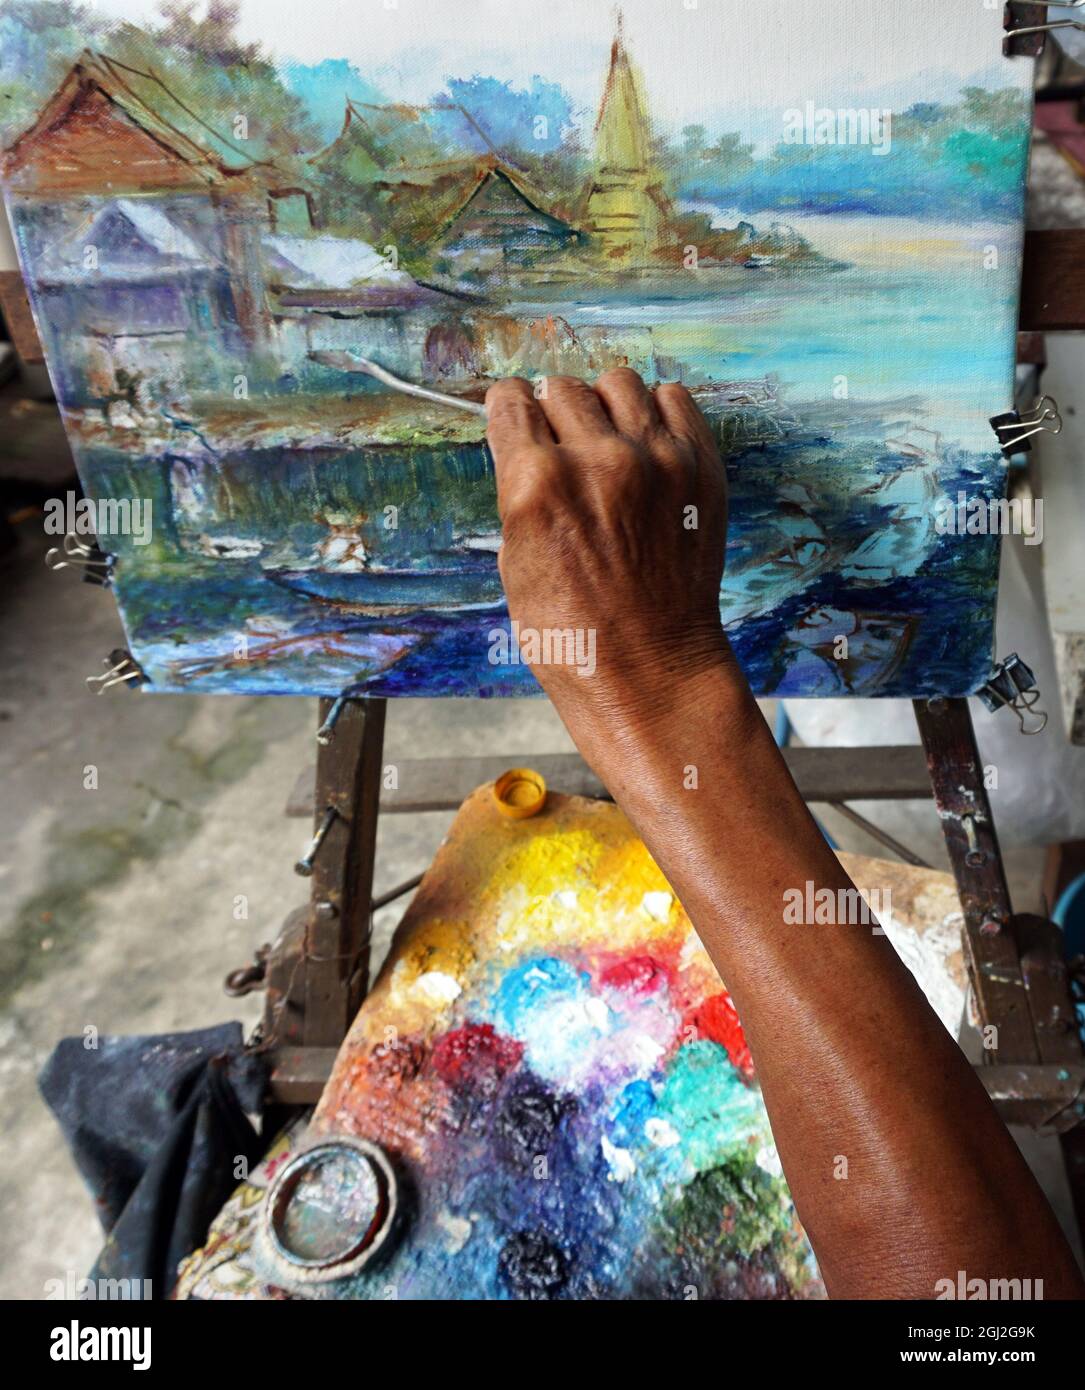 Dipinto ad olio Thailandia Campagna montagna , mercato galleggiante Foto Stock